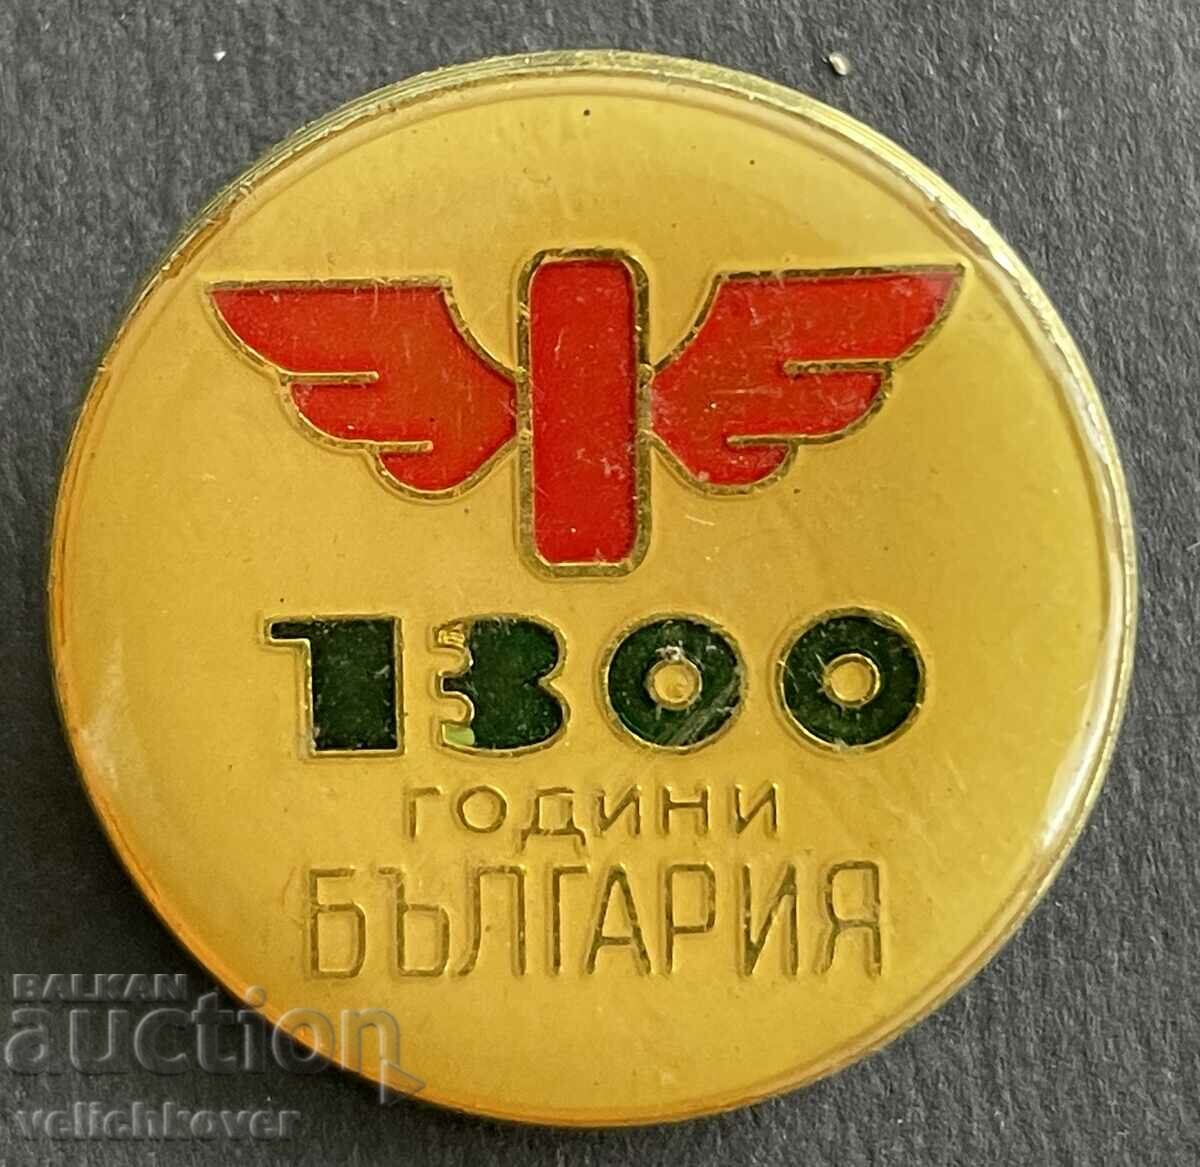 37643 Bulgaria semn BDZ 1300. Bulgaria 1981